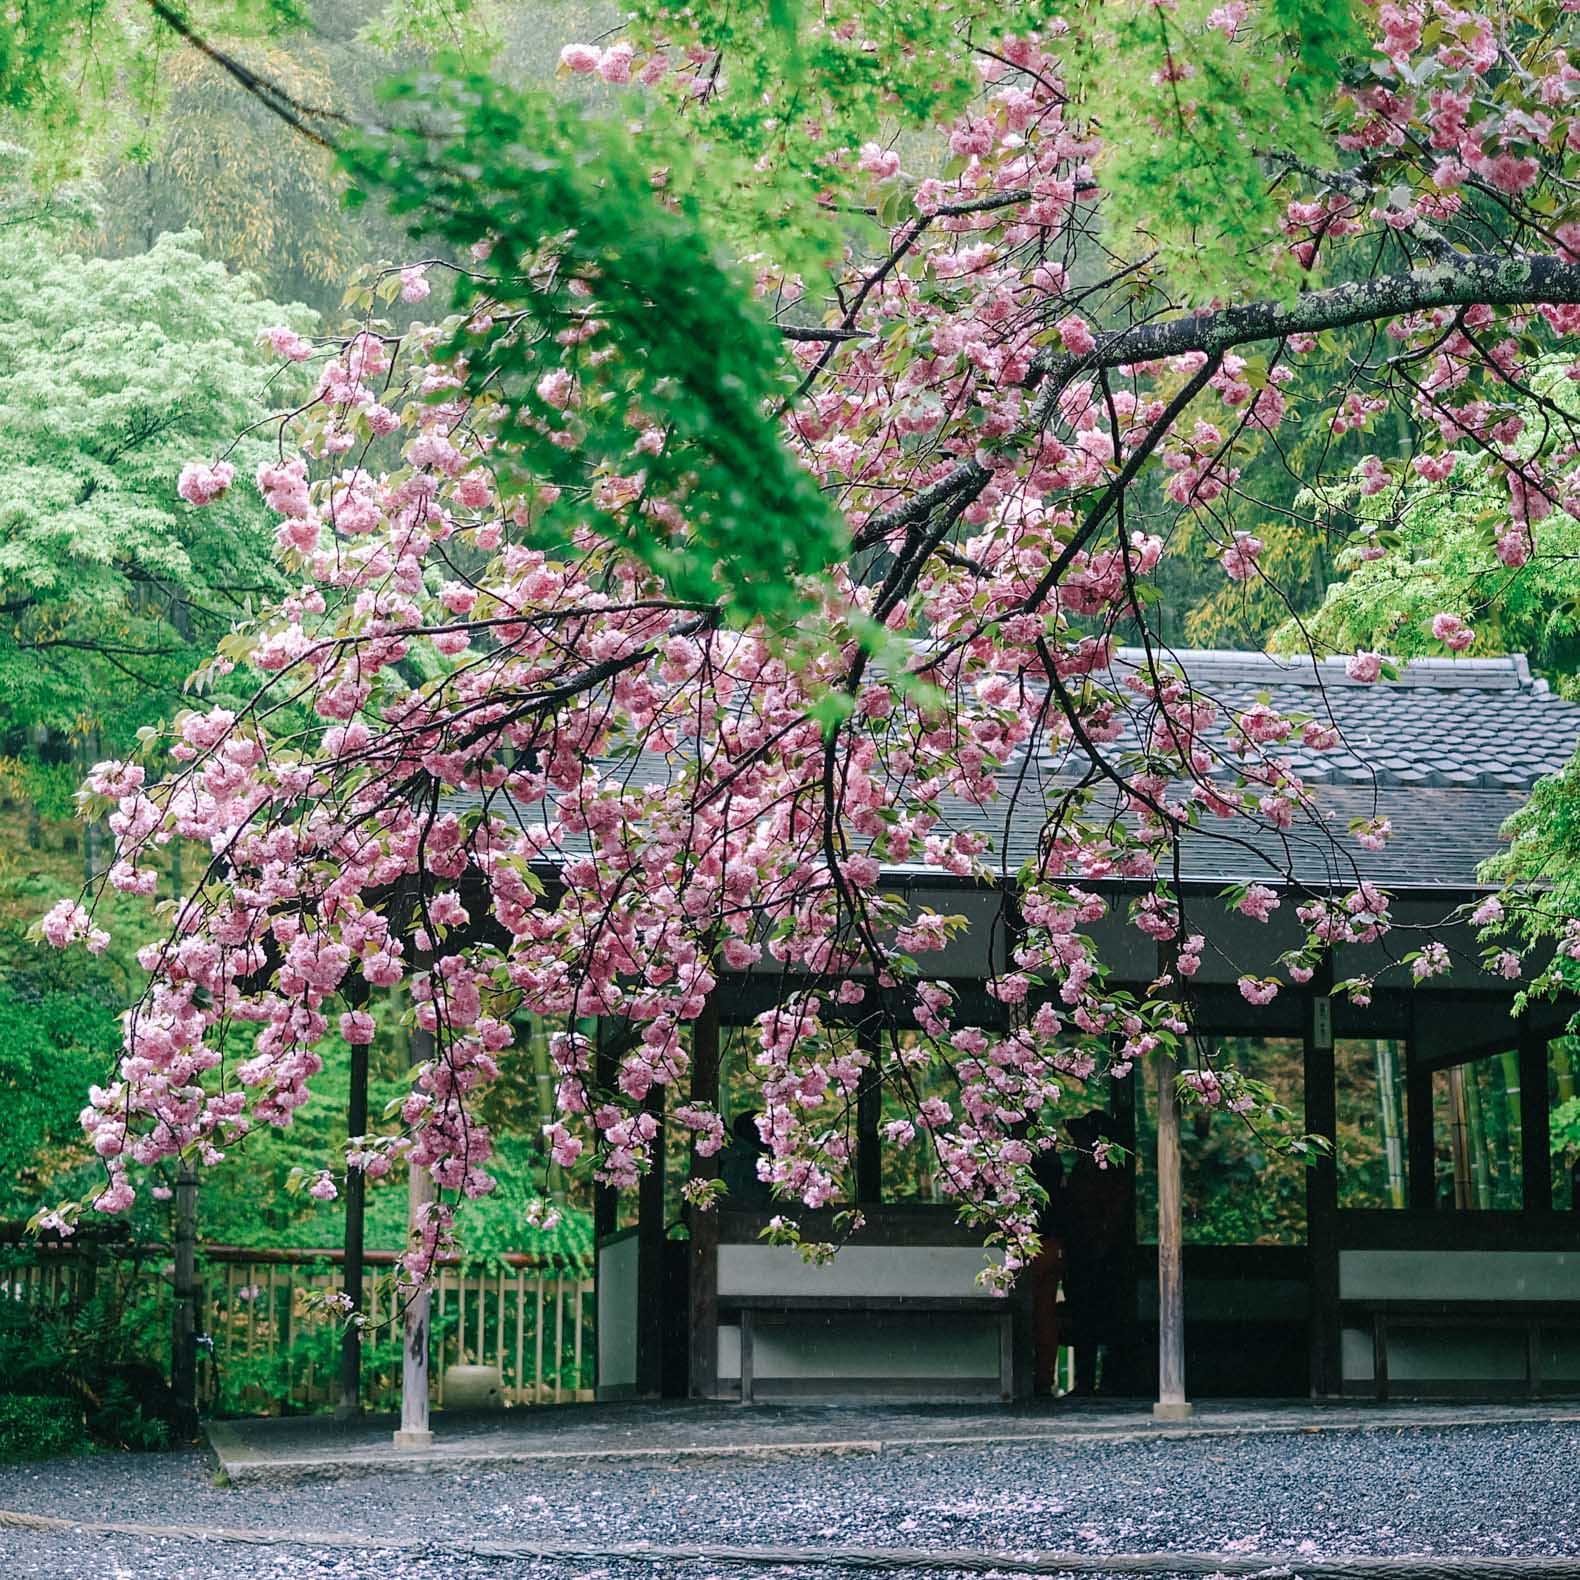 Cherry trees in full bloom at Tenryu-Ji in Kyoto in late April.